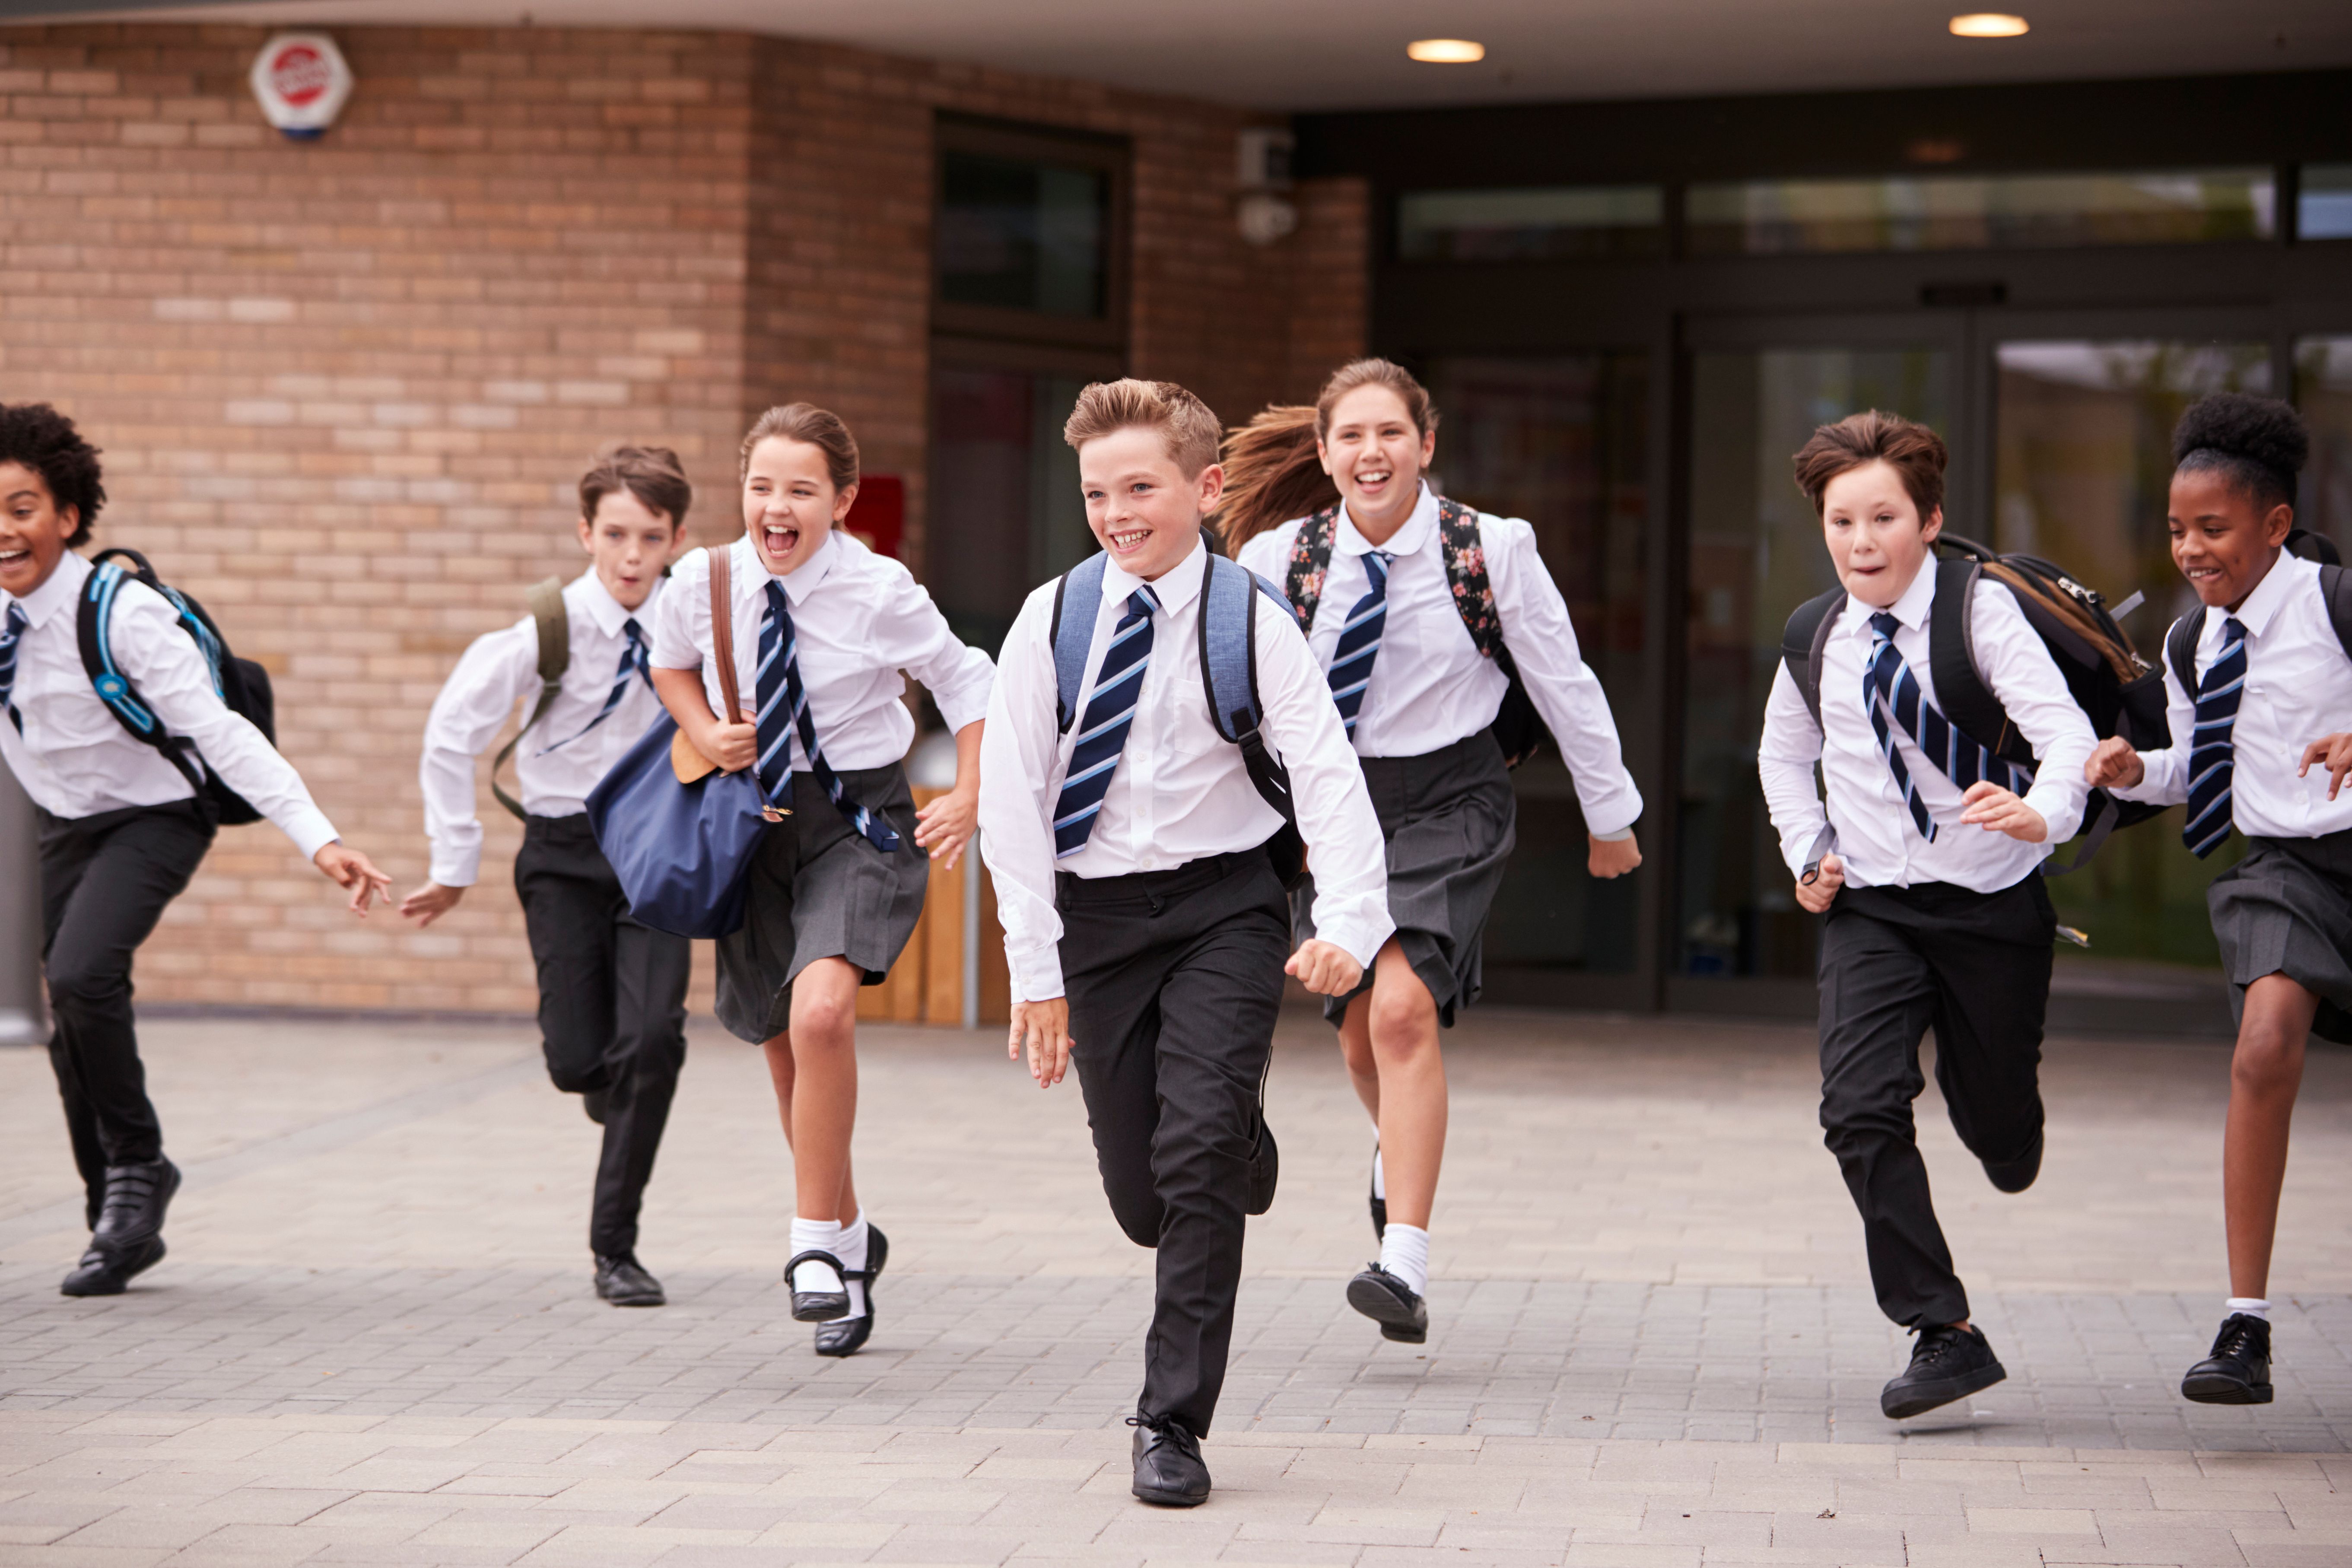 Students running outside school. | Source: Shutterstock